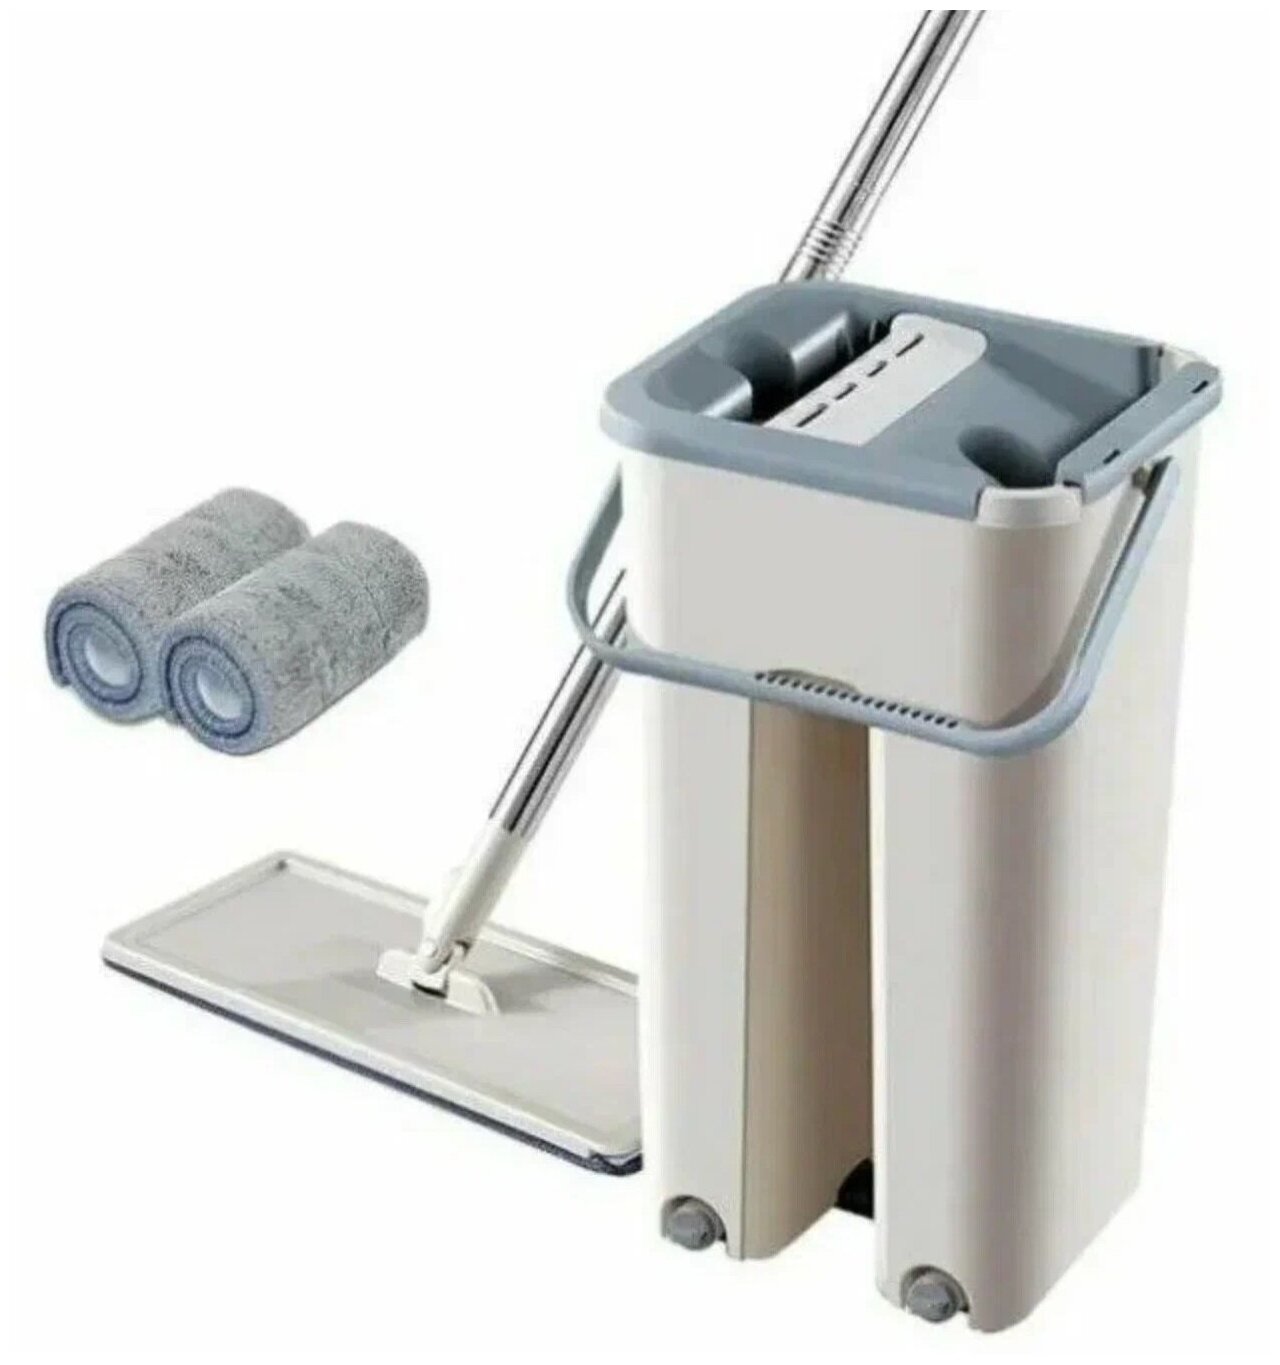 Scratch Cleaning Mop Комплект для уборки швабра и ведро с отжимом